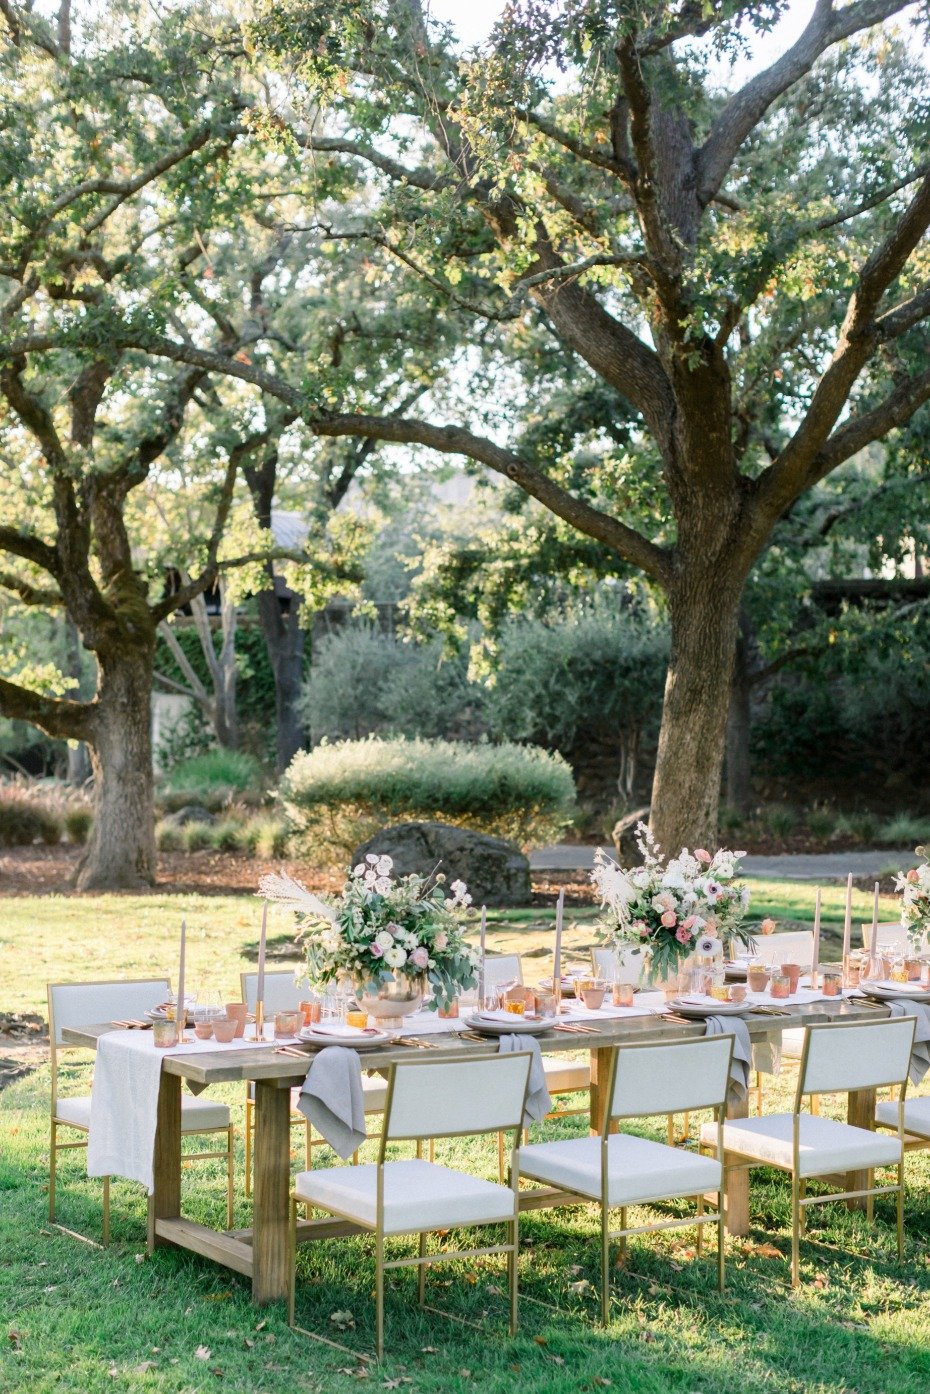 Create an Extraordinary Wedding Experience at Chandon - A Premier Napa/Sonoma Wedding Venue